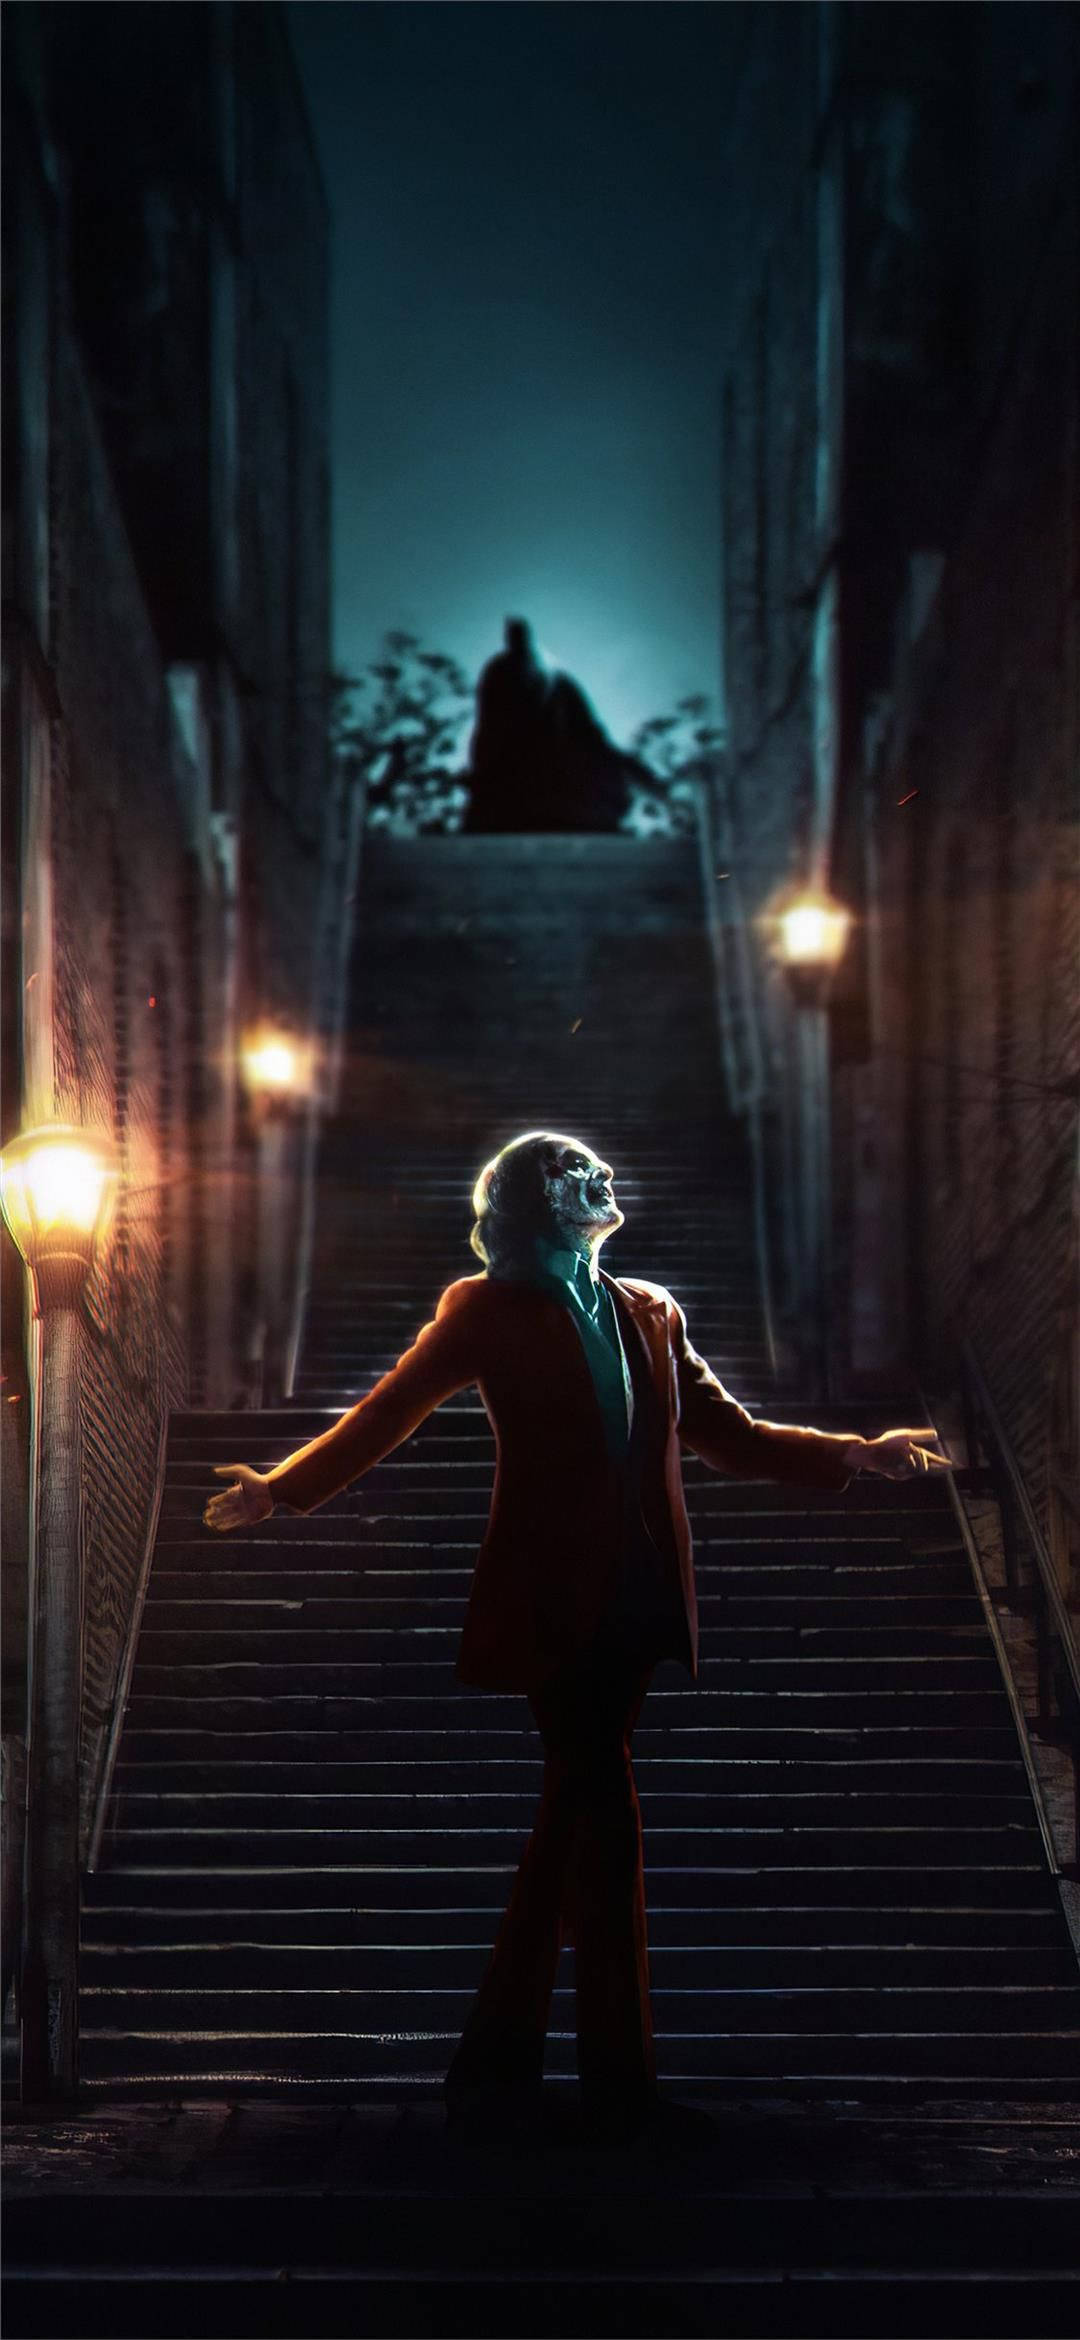 Dancing Clown On Stair Joker 2019 Background